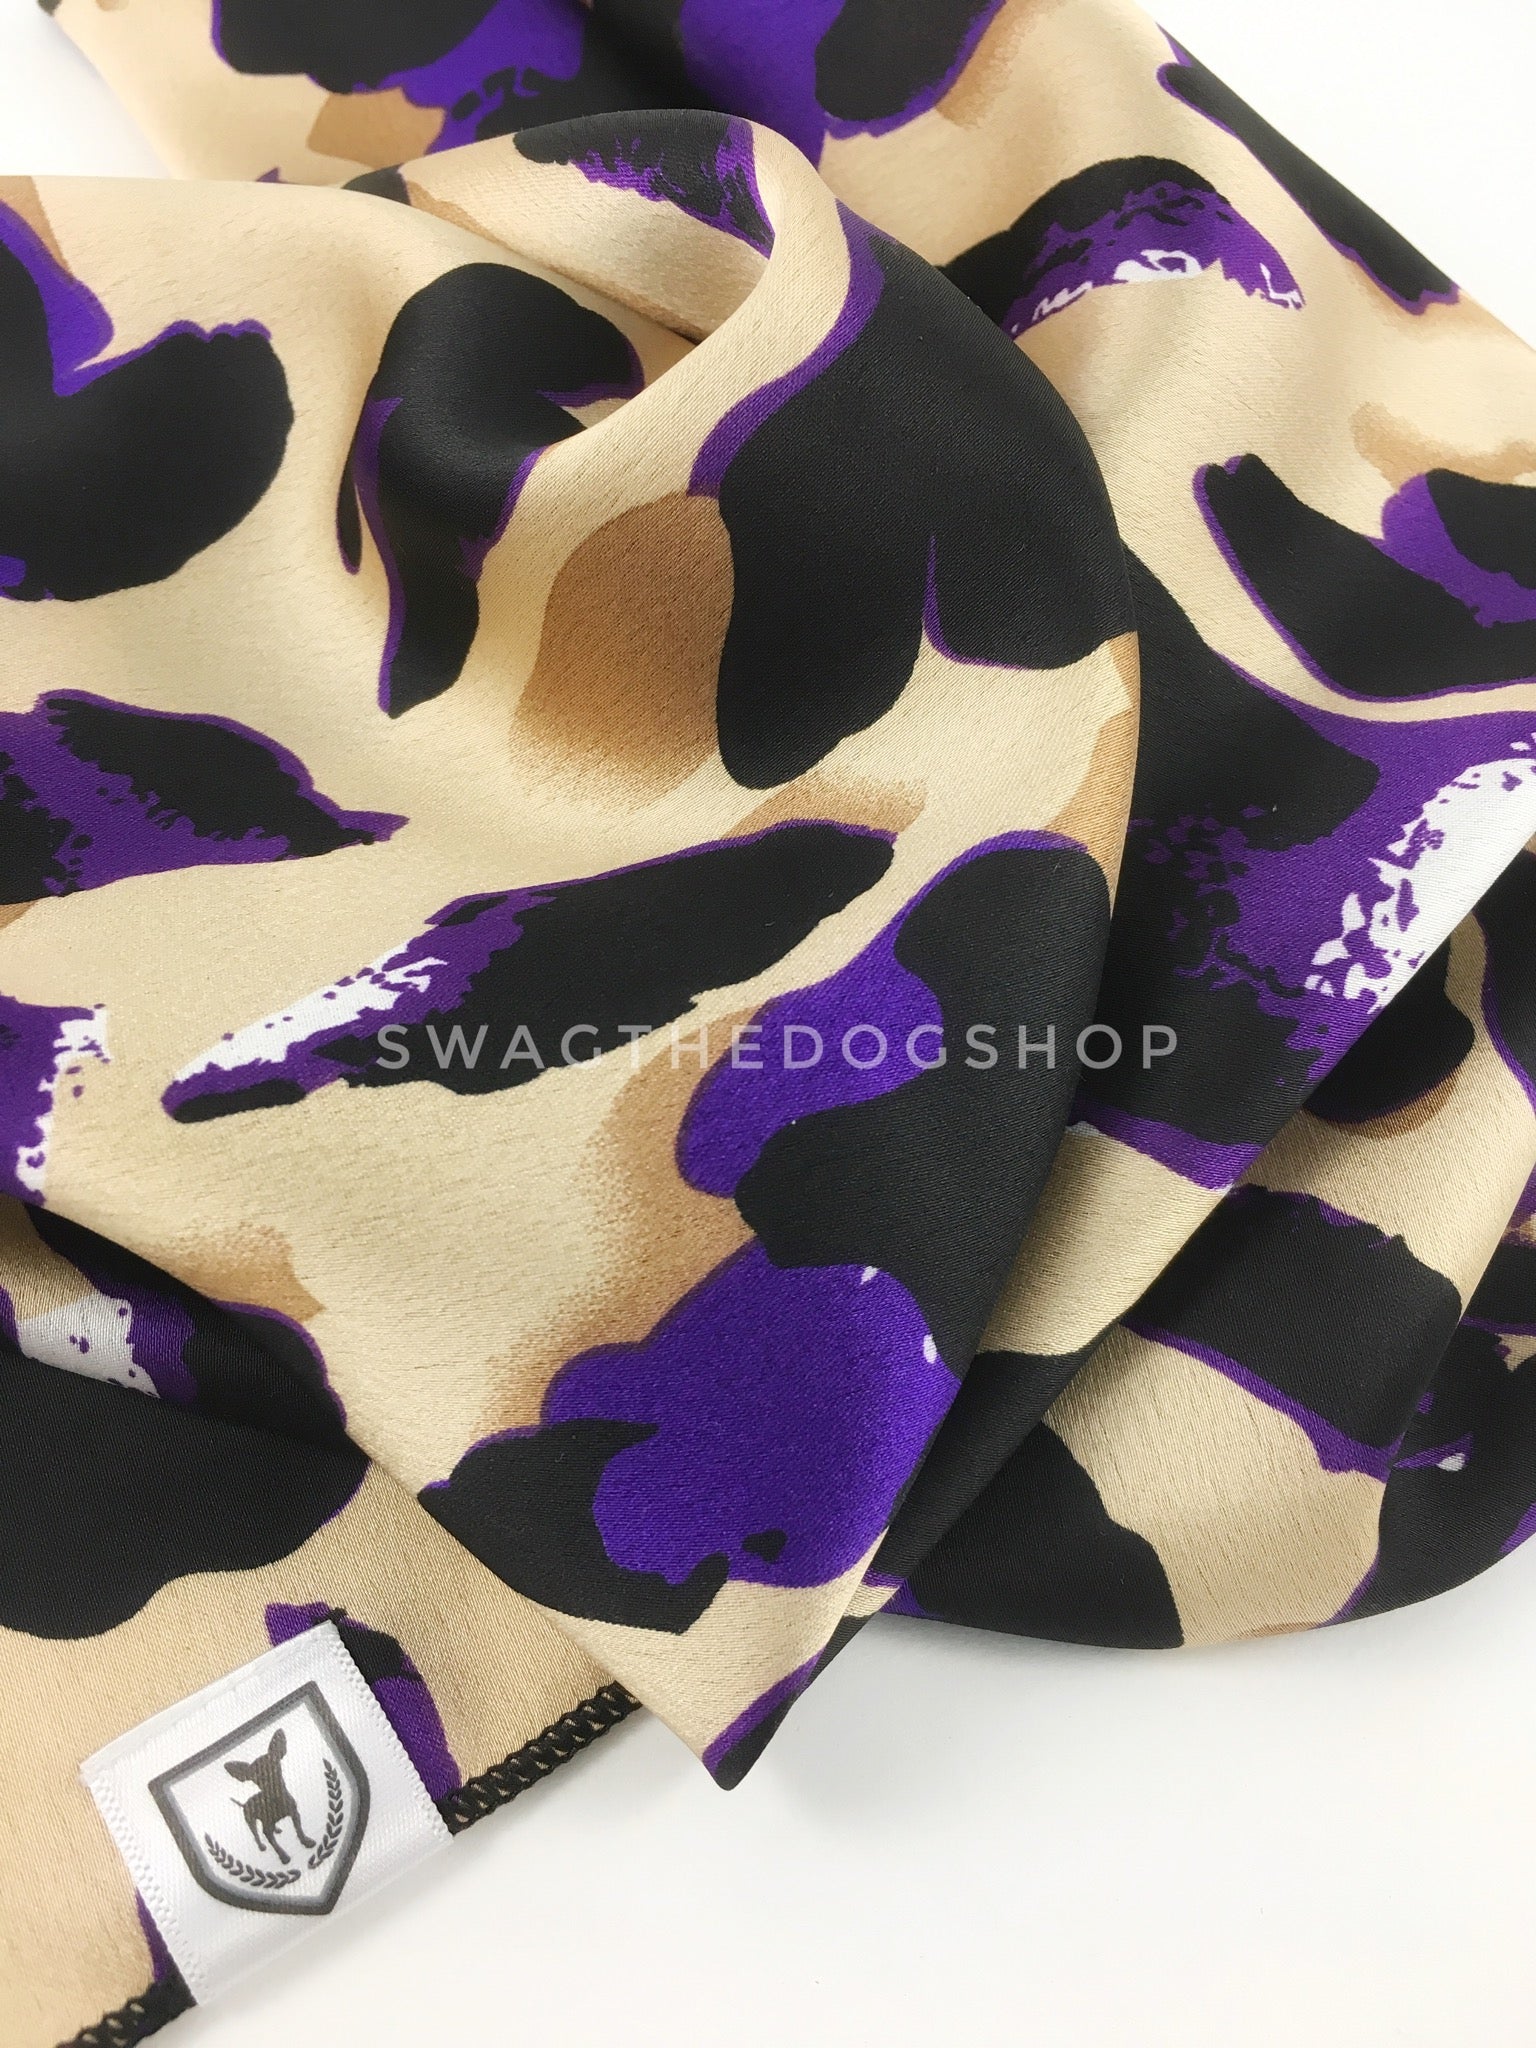 Fierce Beige with Purple Swagdana Scarf - Close-up View of Product. Dog Bandana. Dog Scarf